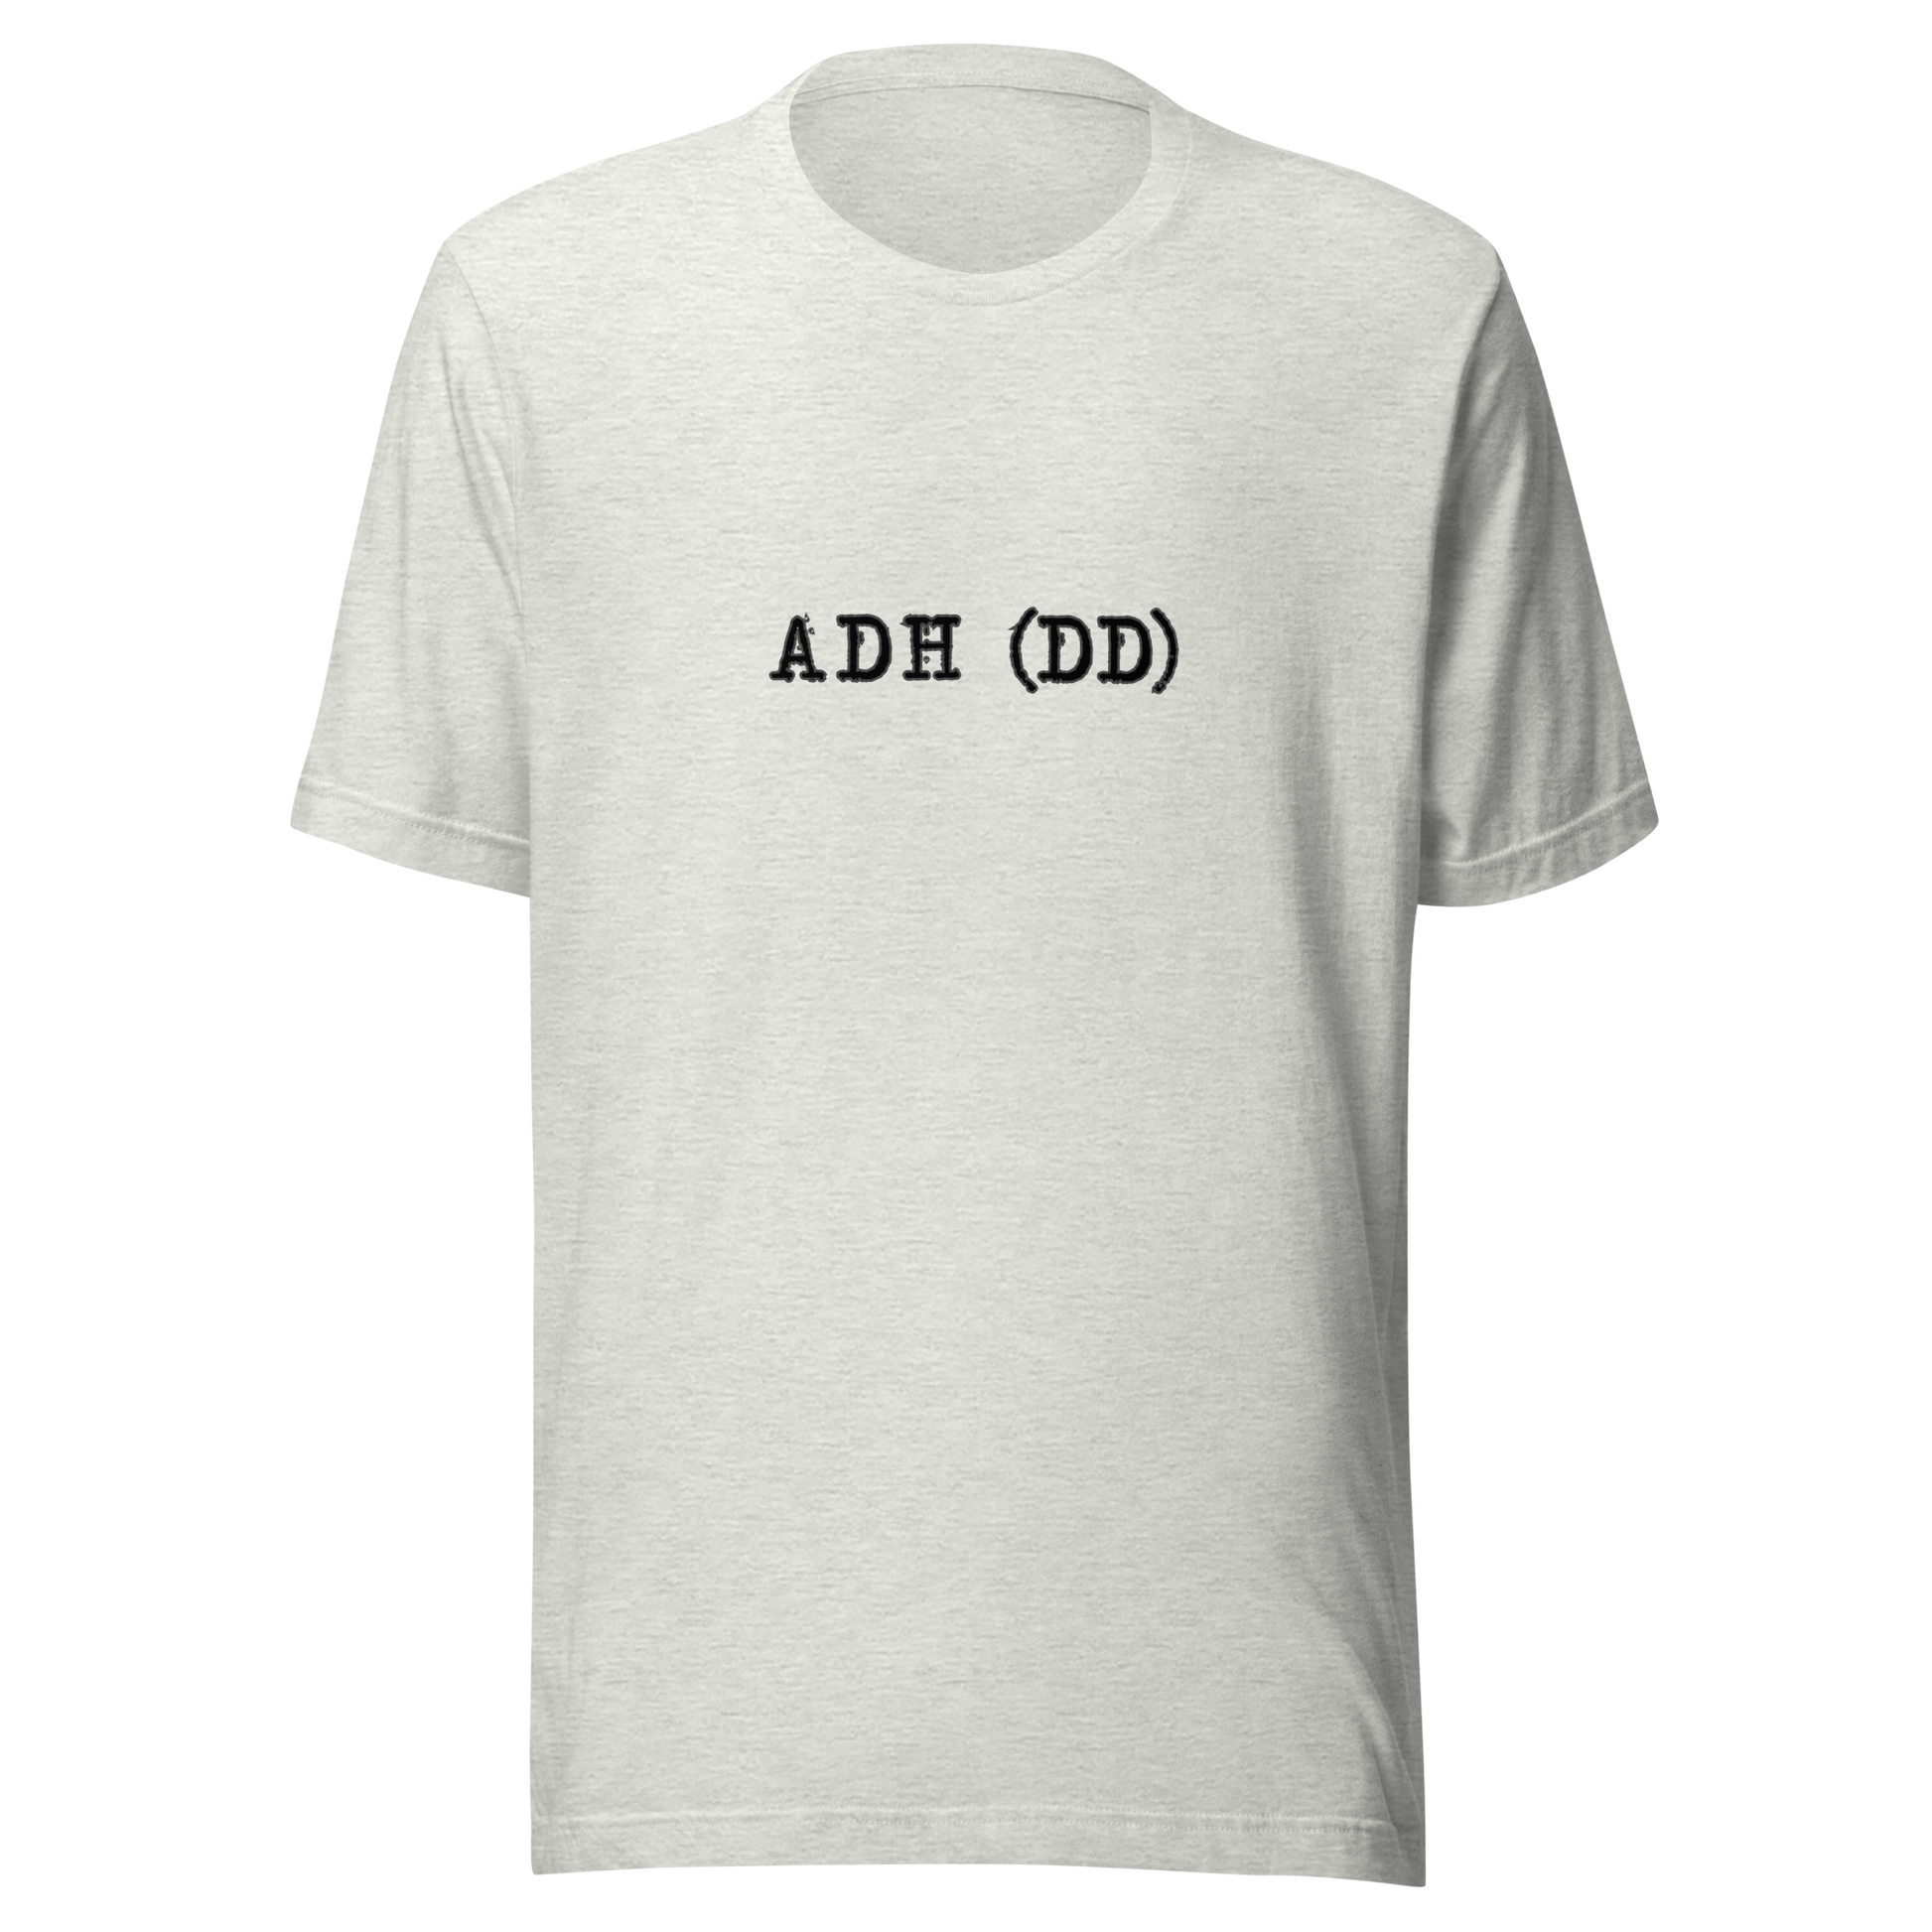 adh(dd) t-shirt in white - gaslit apparel